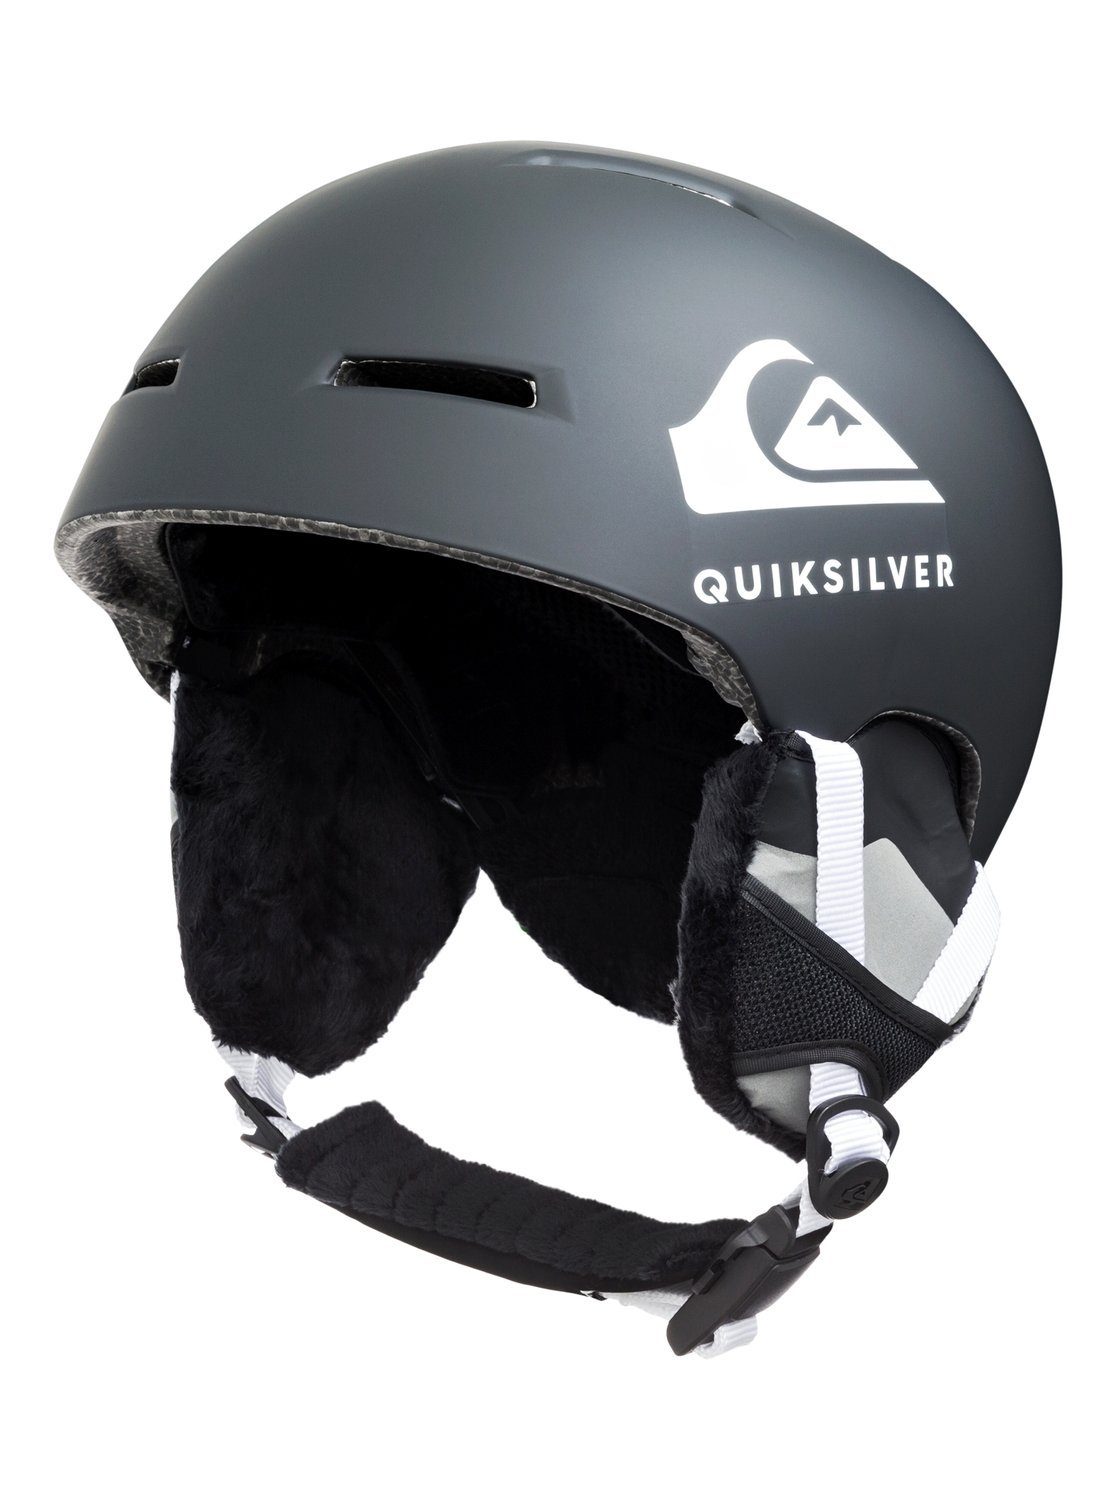 Quiksilver Theory - Snowboard/Ski Helmet for Men - Black - 